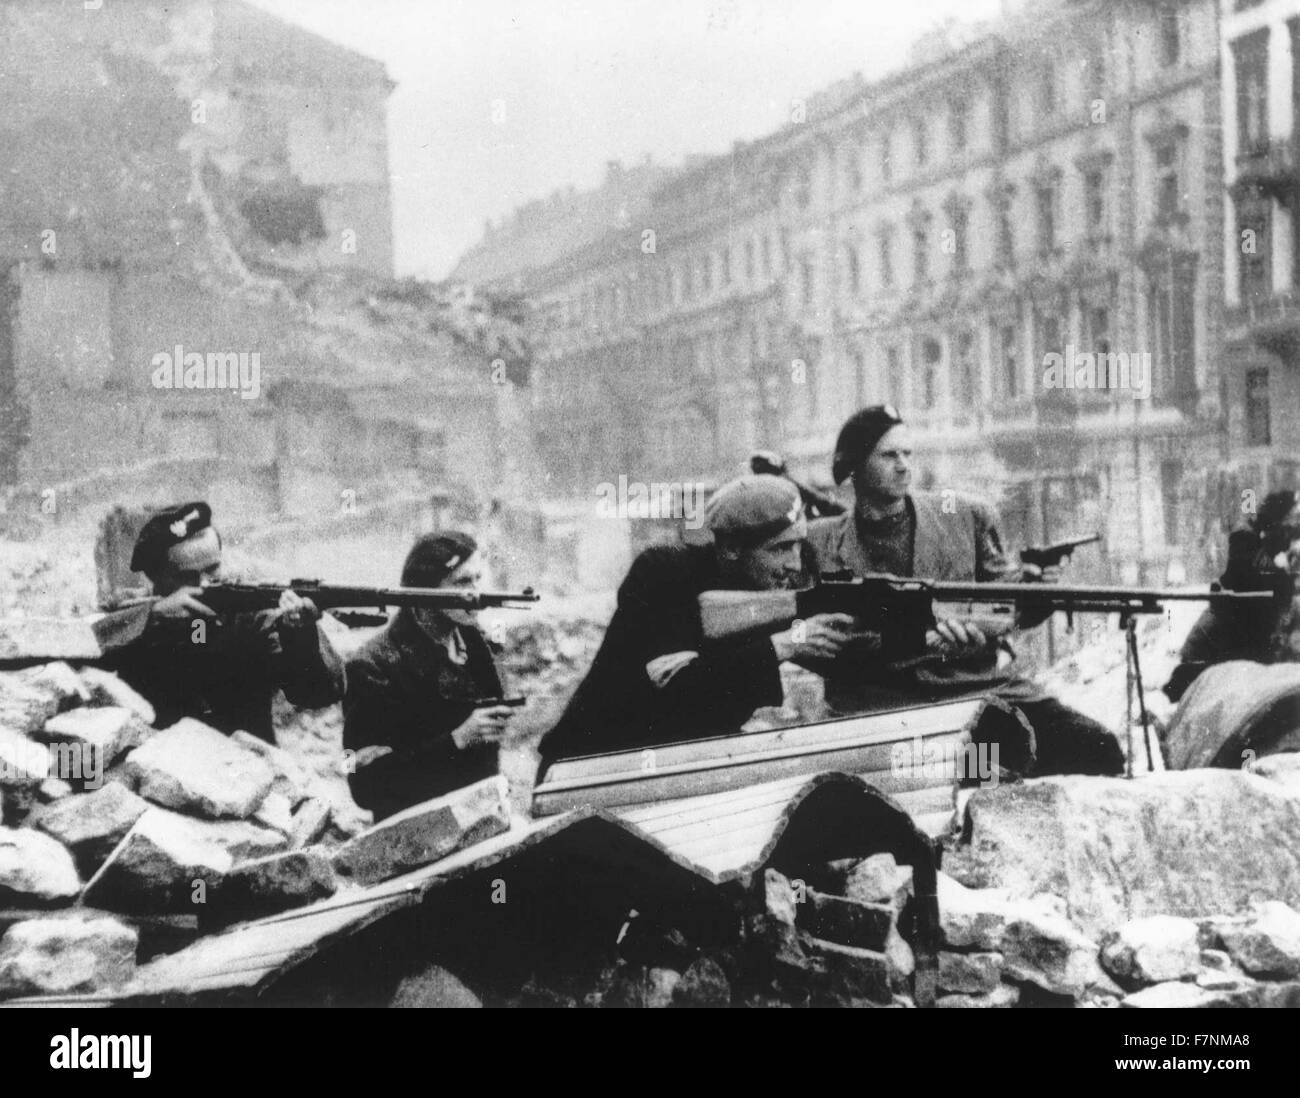 World War Two: The Warsaw Uprising (powstanie warszawskie) by the Polish resistance Home Army to liberate Warsaw from Nazi Germany. 1944 Stock Photo